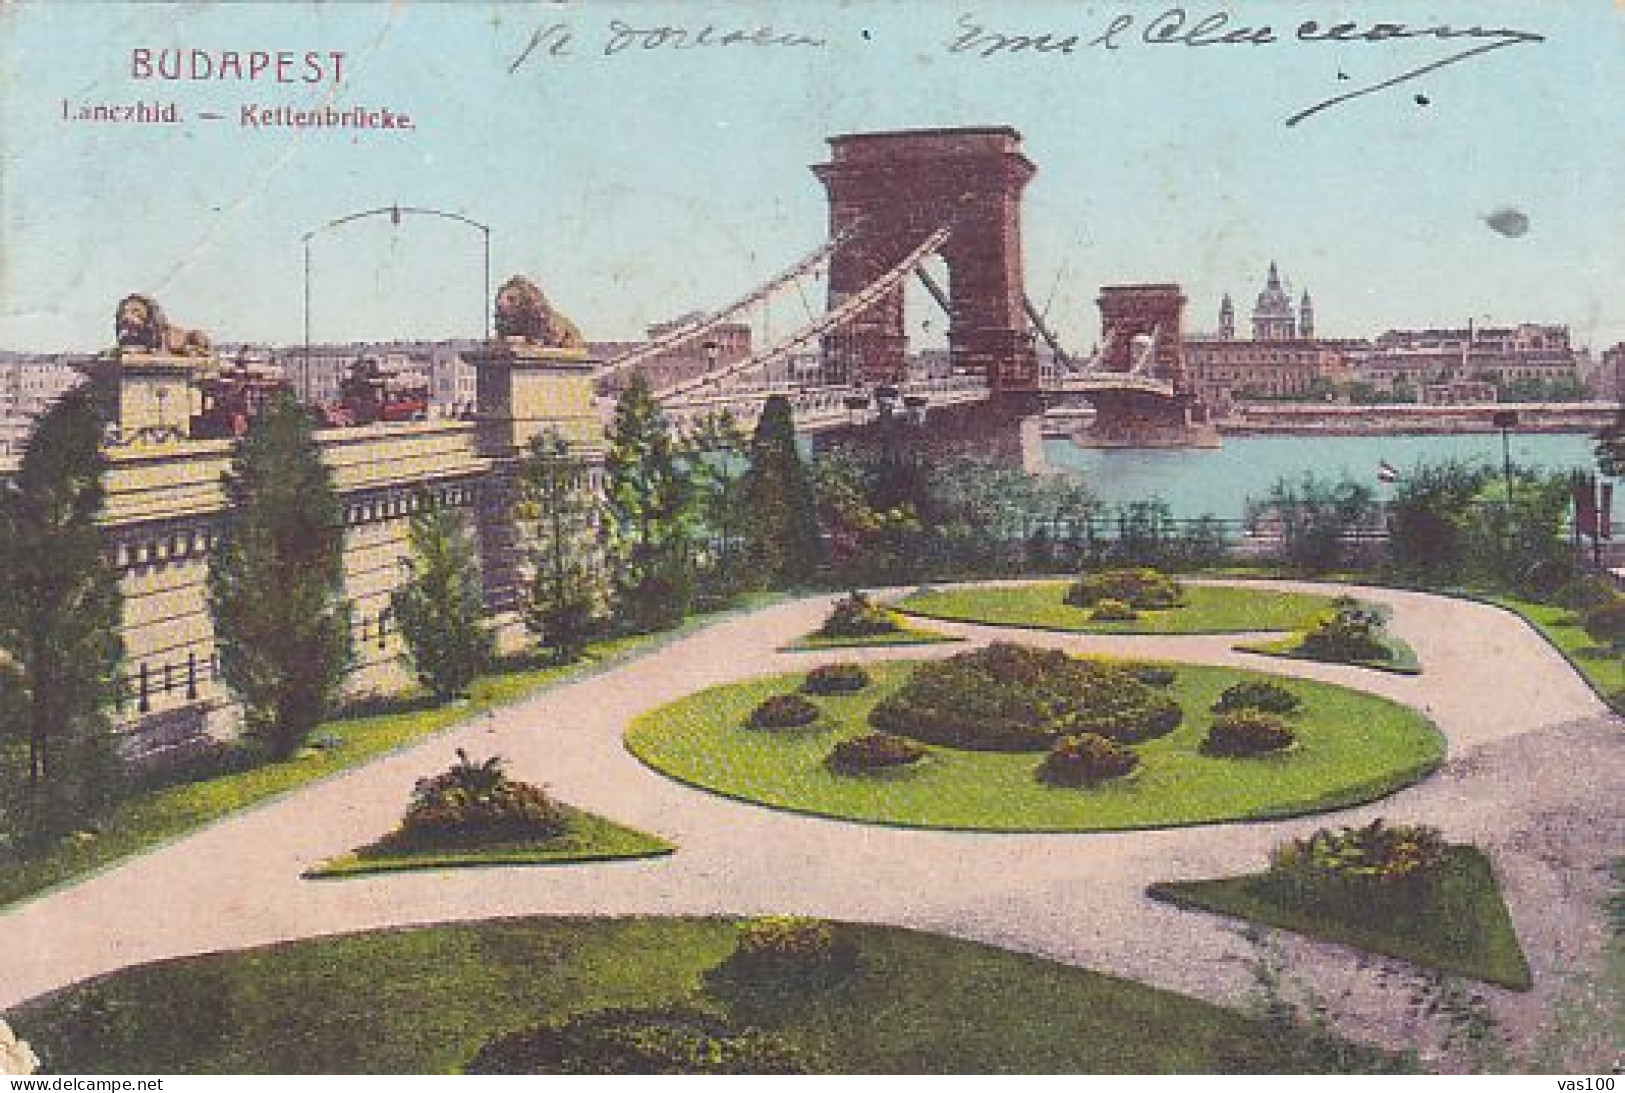 POSTAGE DUE, PORTO STAMPS ON BUDAPEST CHAIN BRIDGE POSTCARD, 1907, ROMANIA - Portomarken